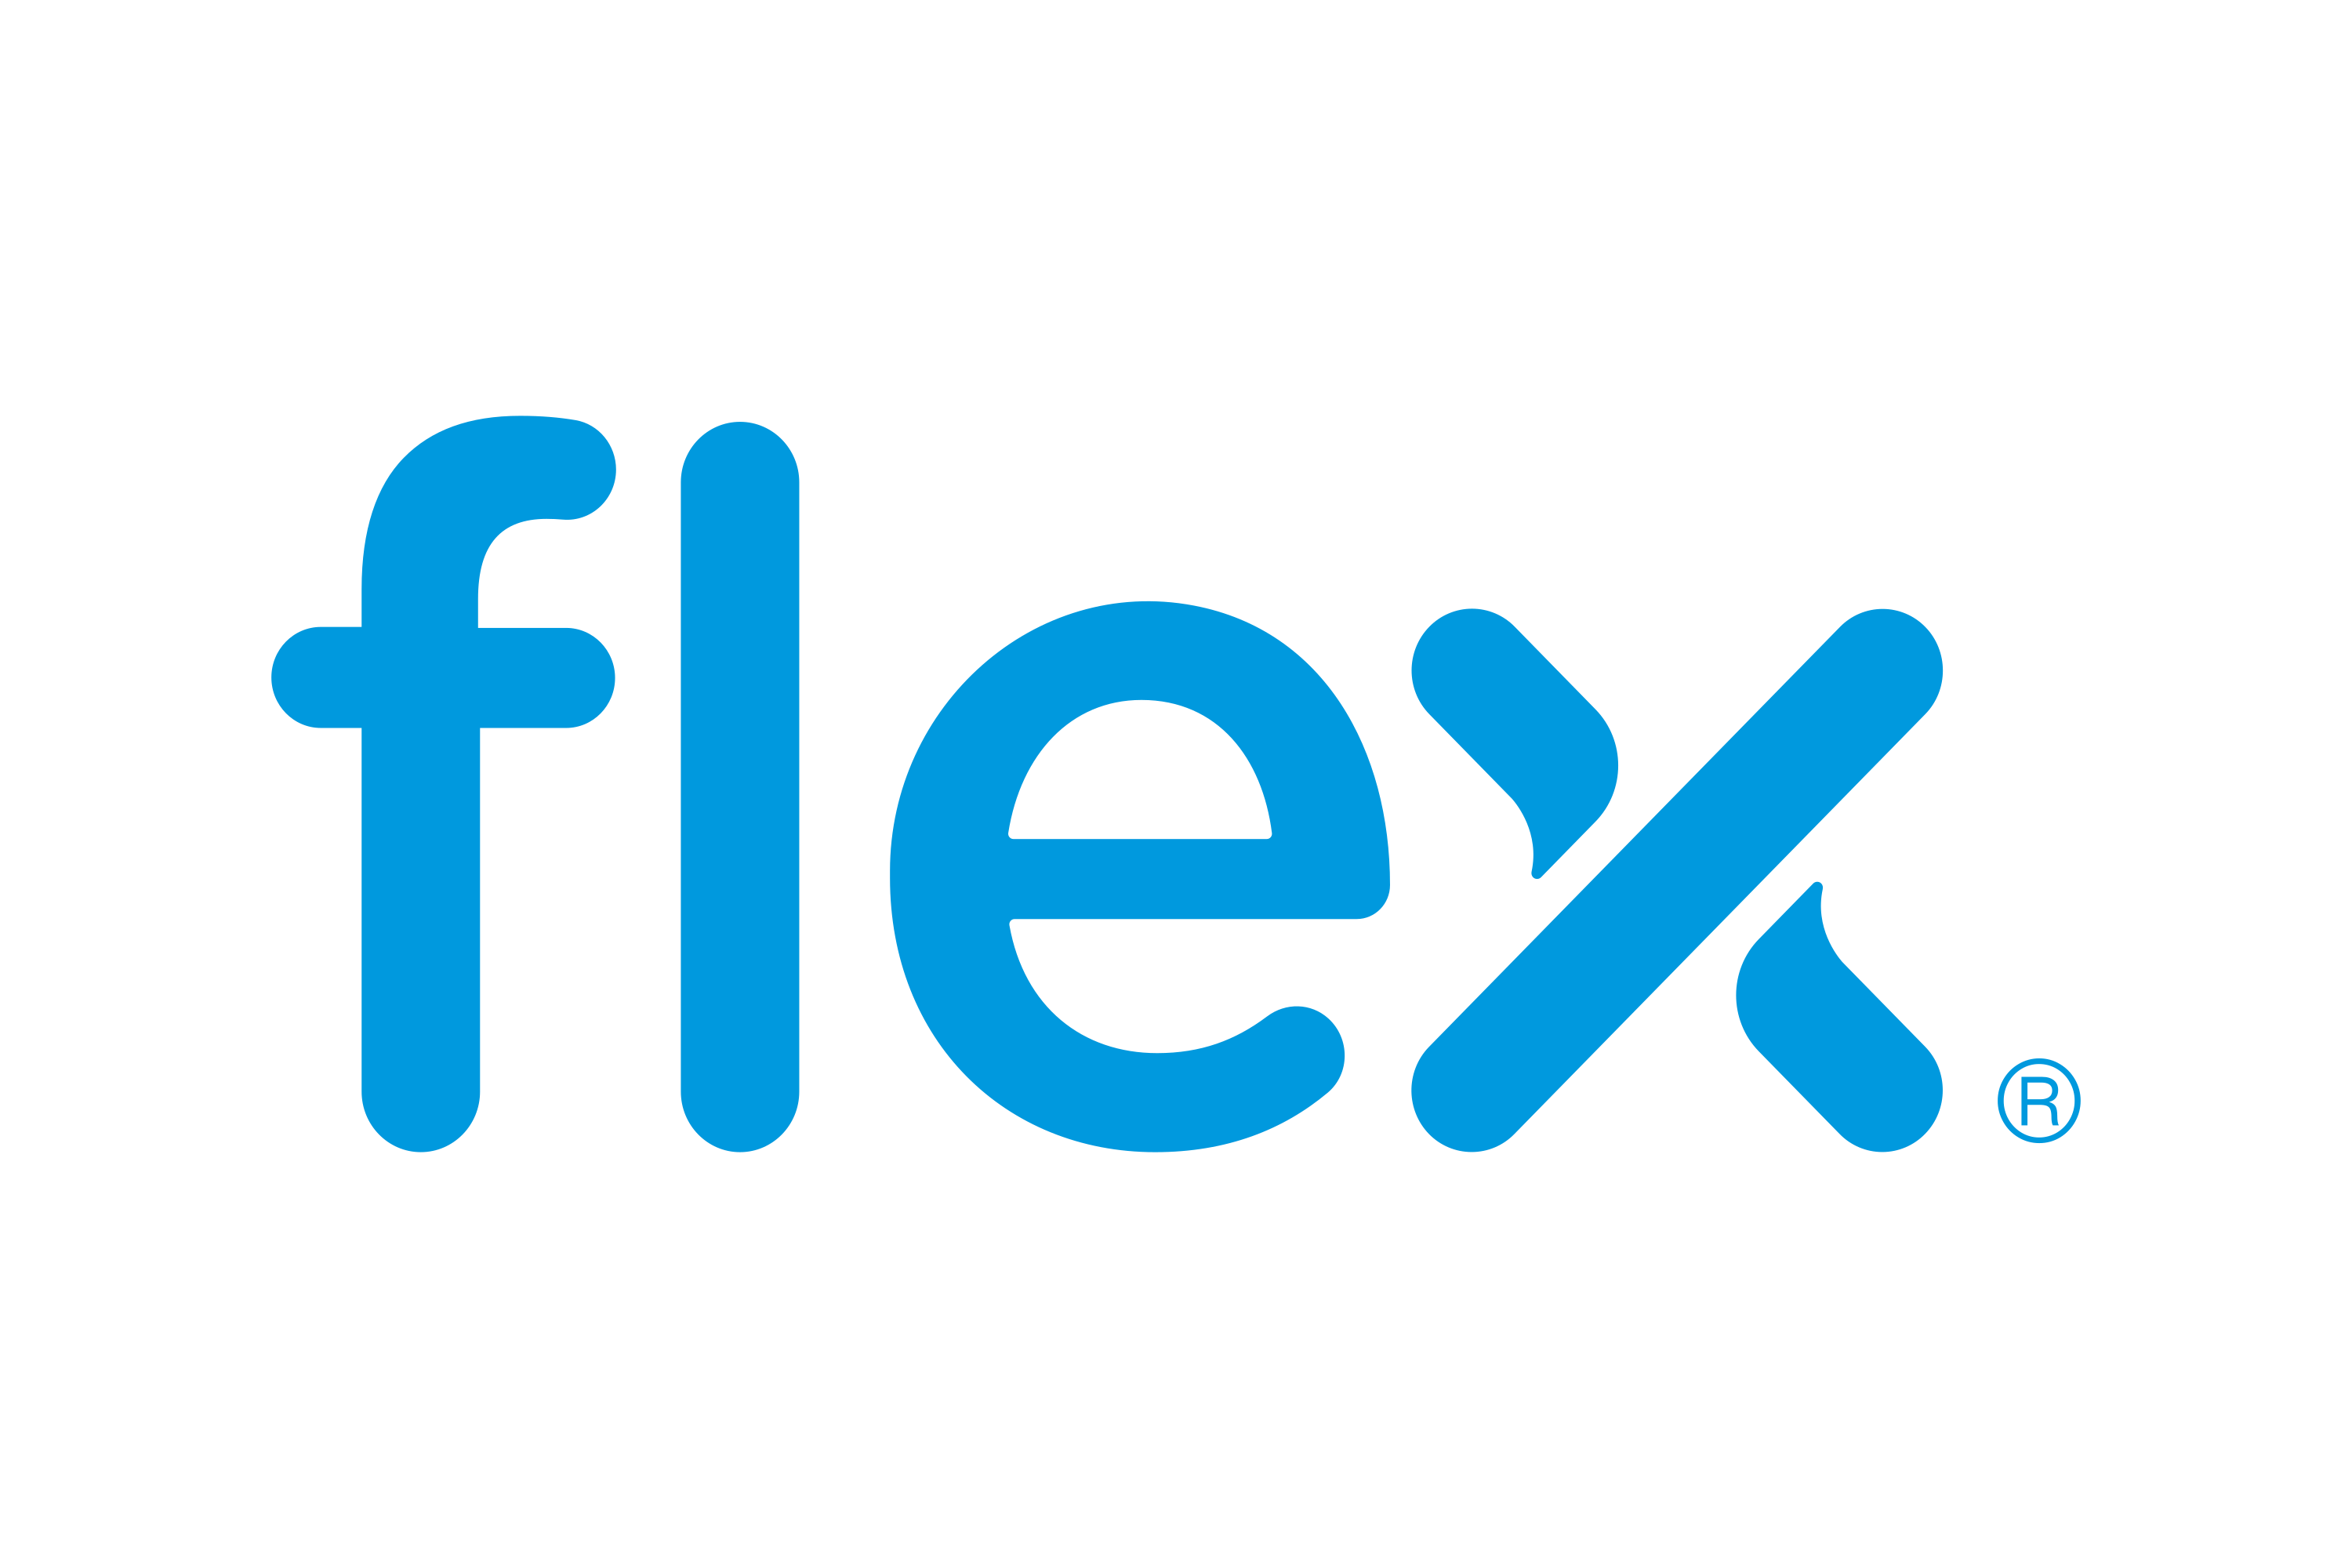 Flextronics Brand Logo